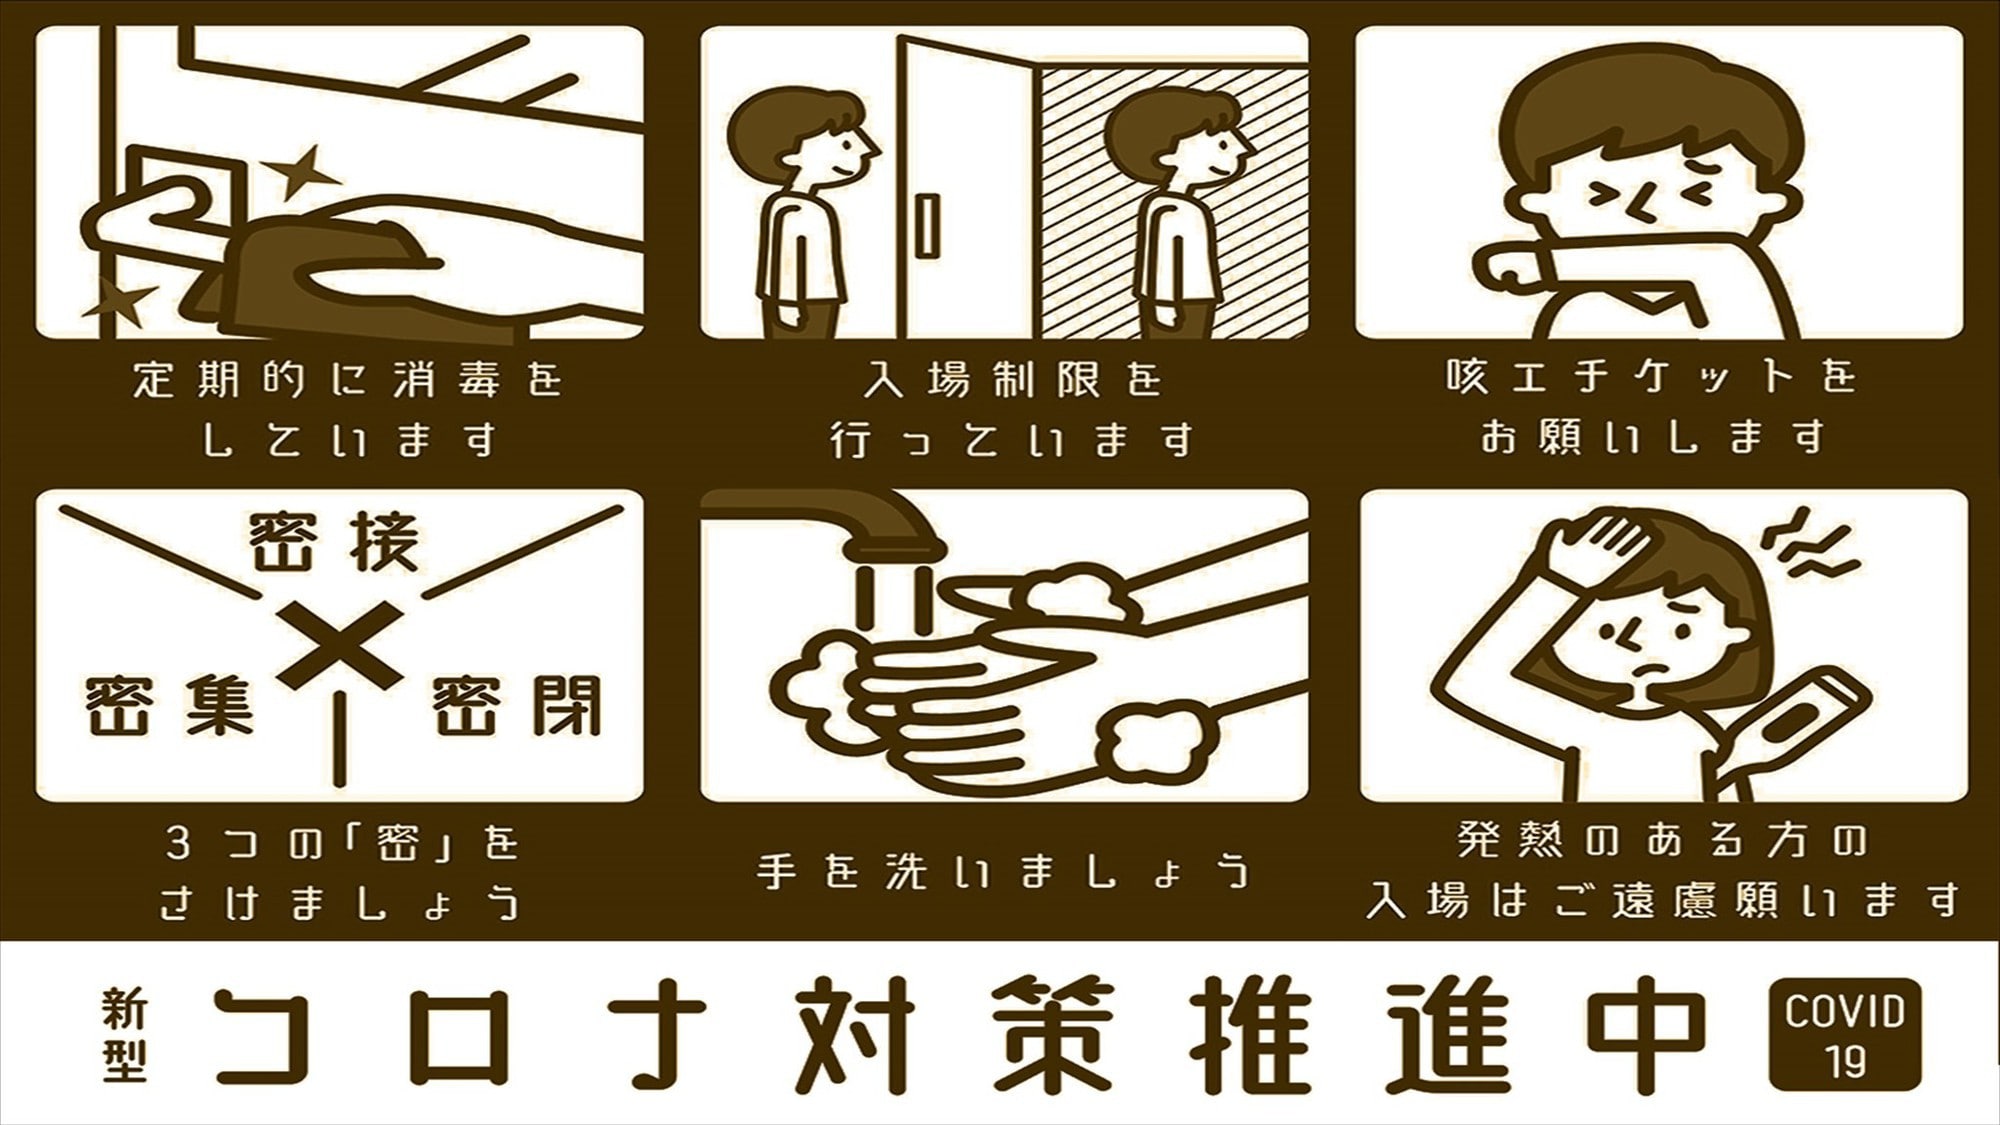 Hygiene management pictogram